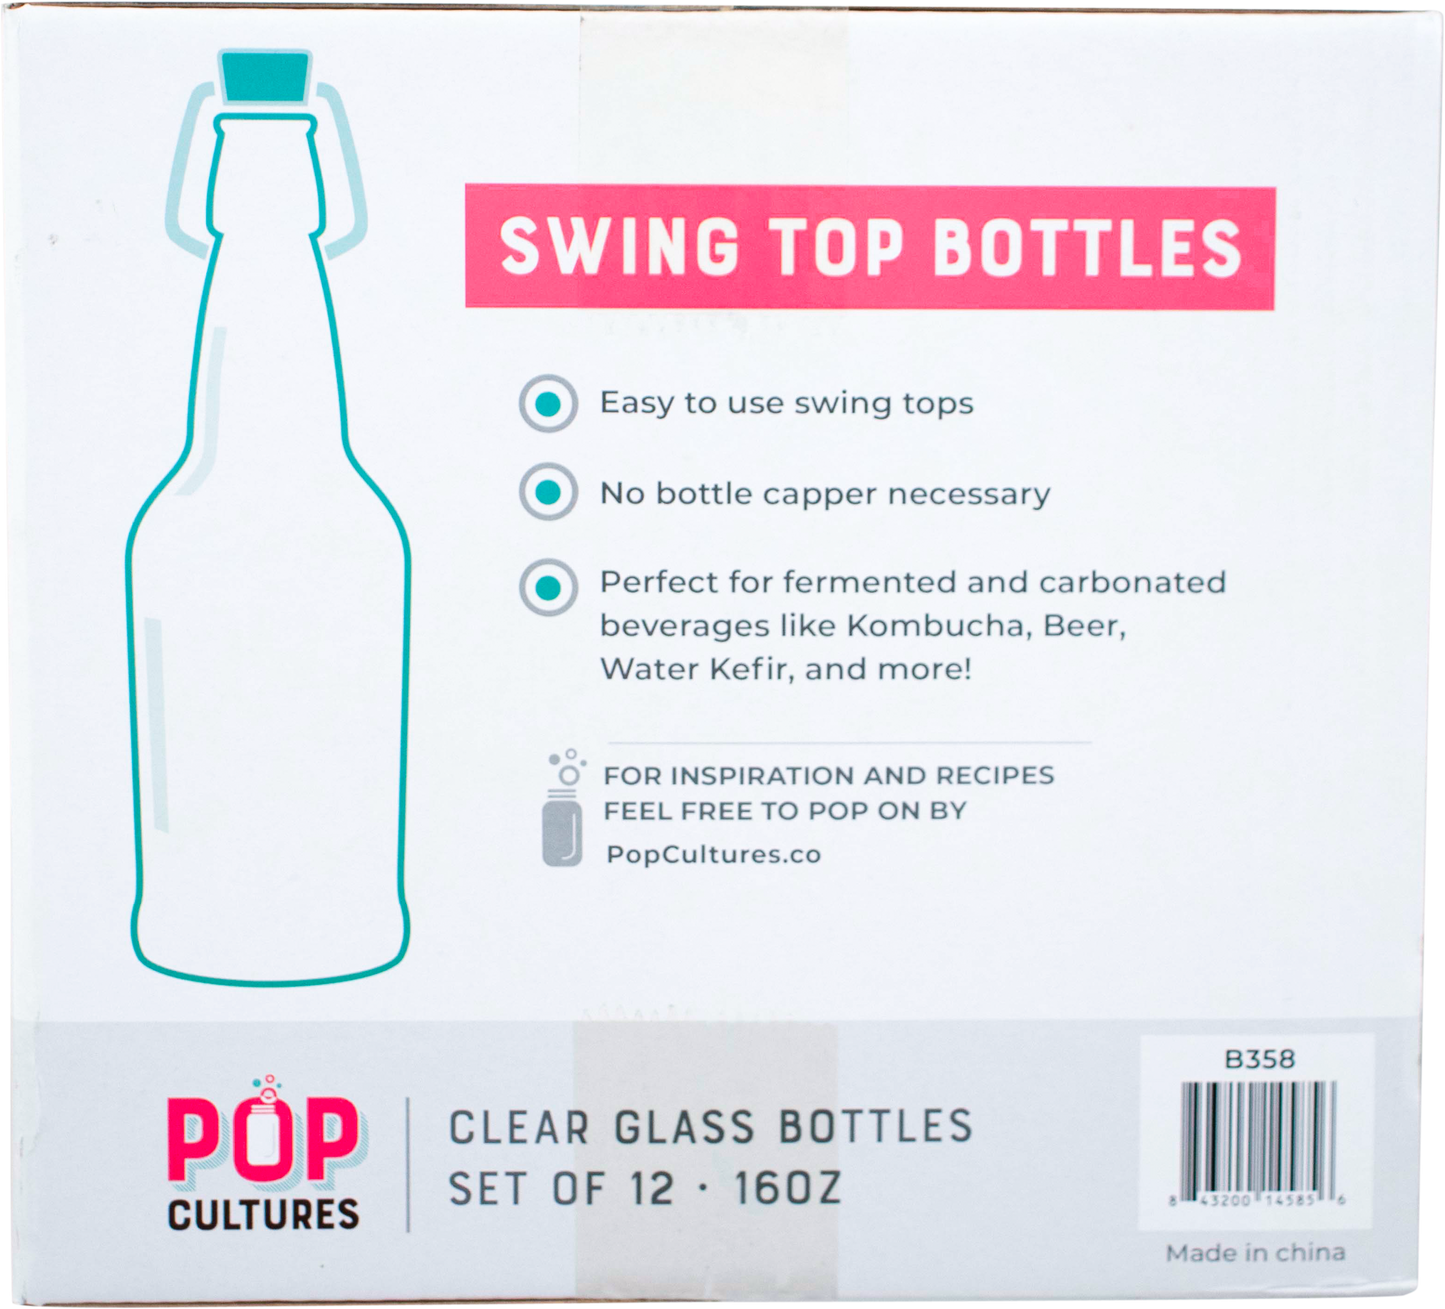 PopTops Bottles - 16 oz Clear Swing Top (Qty 12)